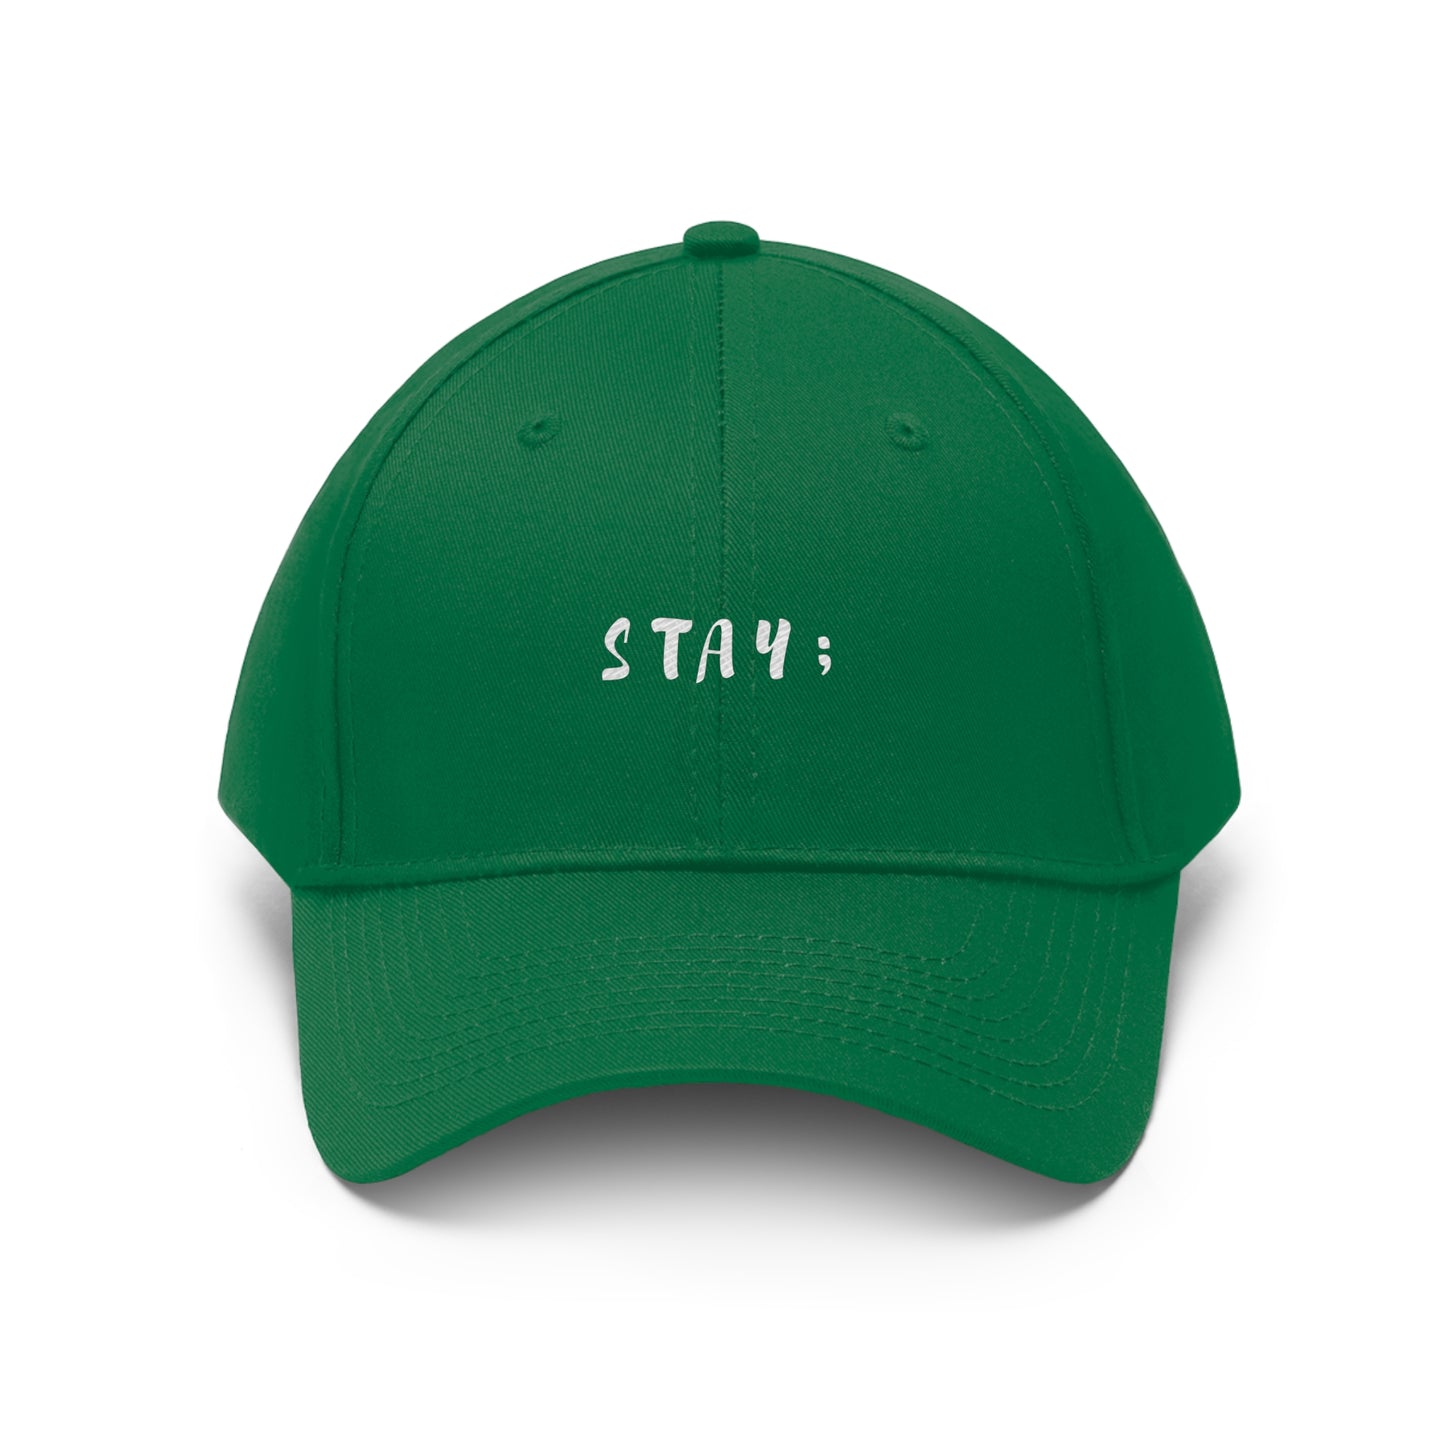 Stay; Twill Hat